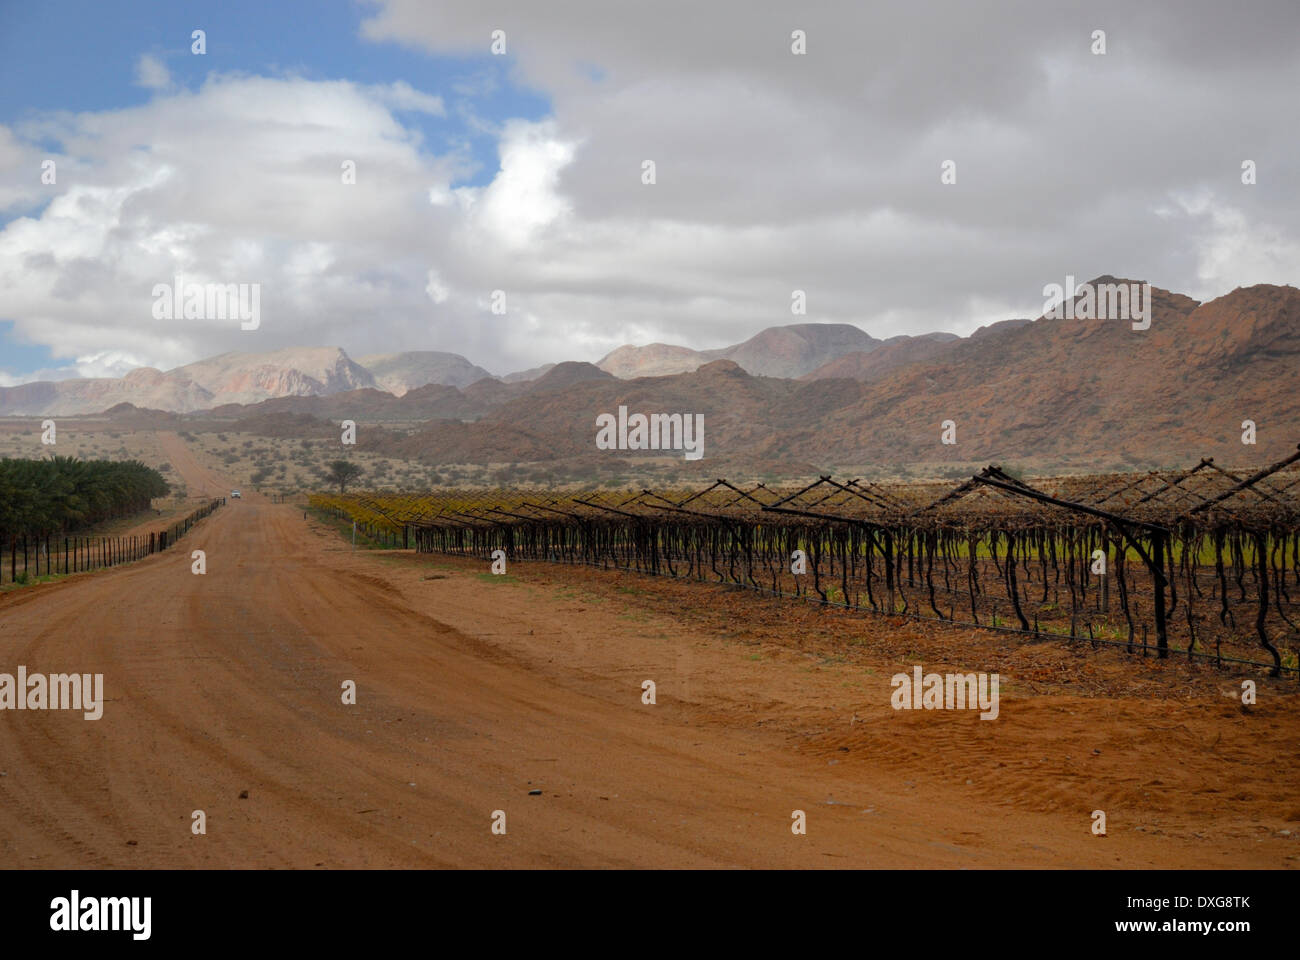 Wine farm near Klein Pella, Namaqualand 4x4 Trail Stock Photo